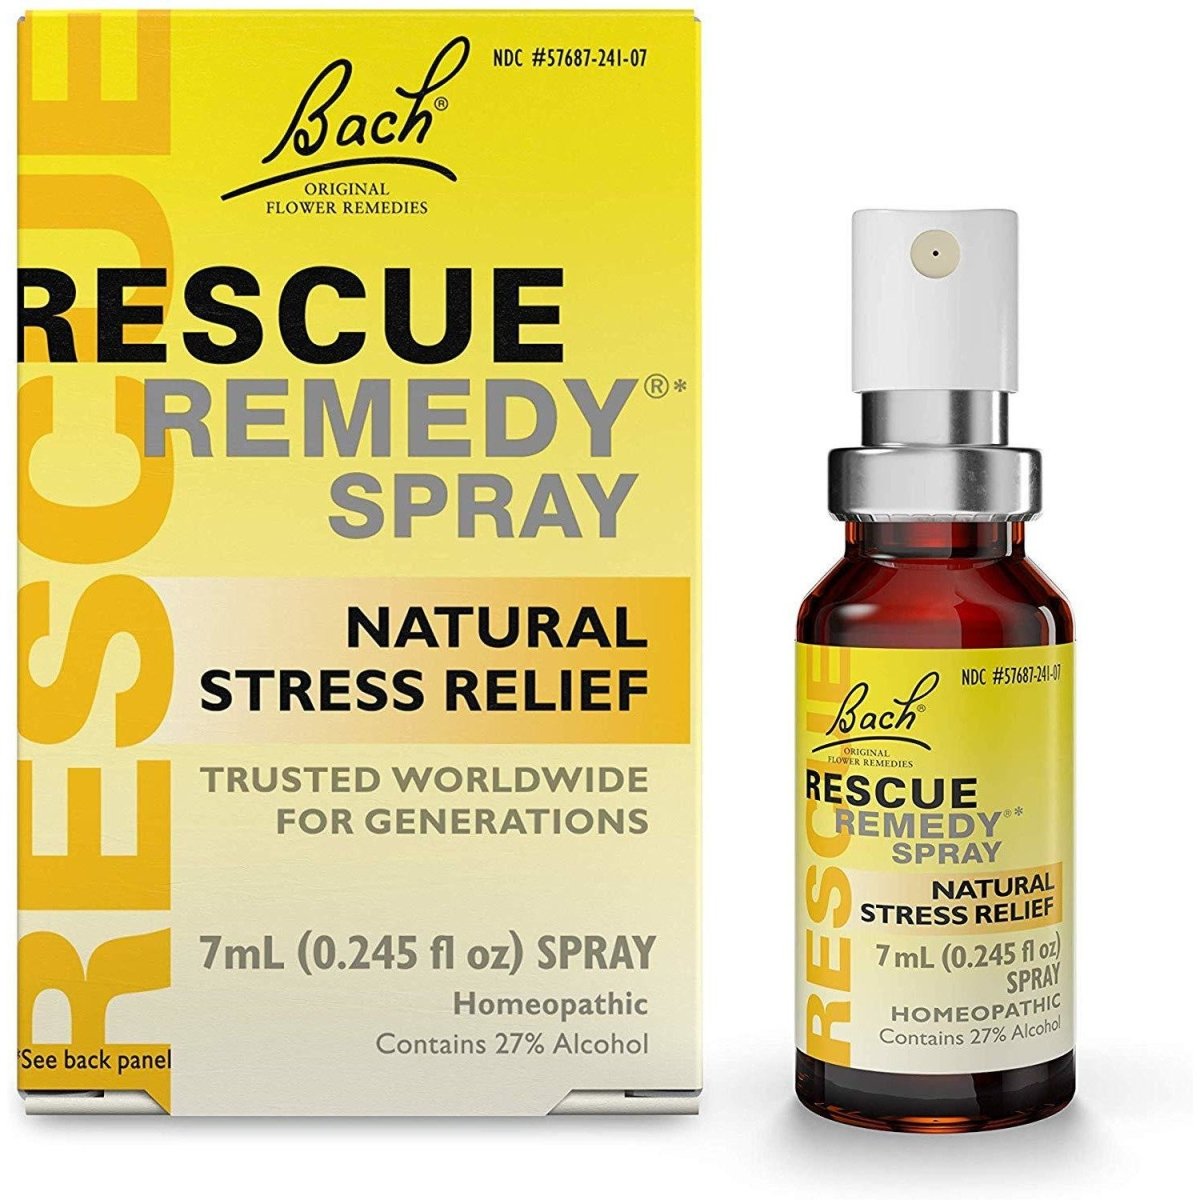 Rescue Remedy Spray - Stress Relief - 7ml